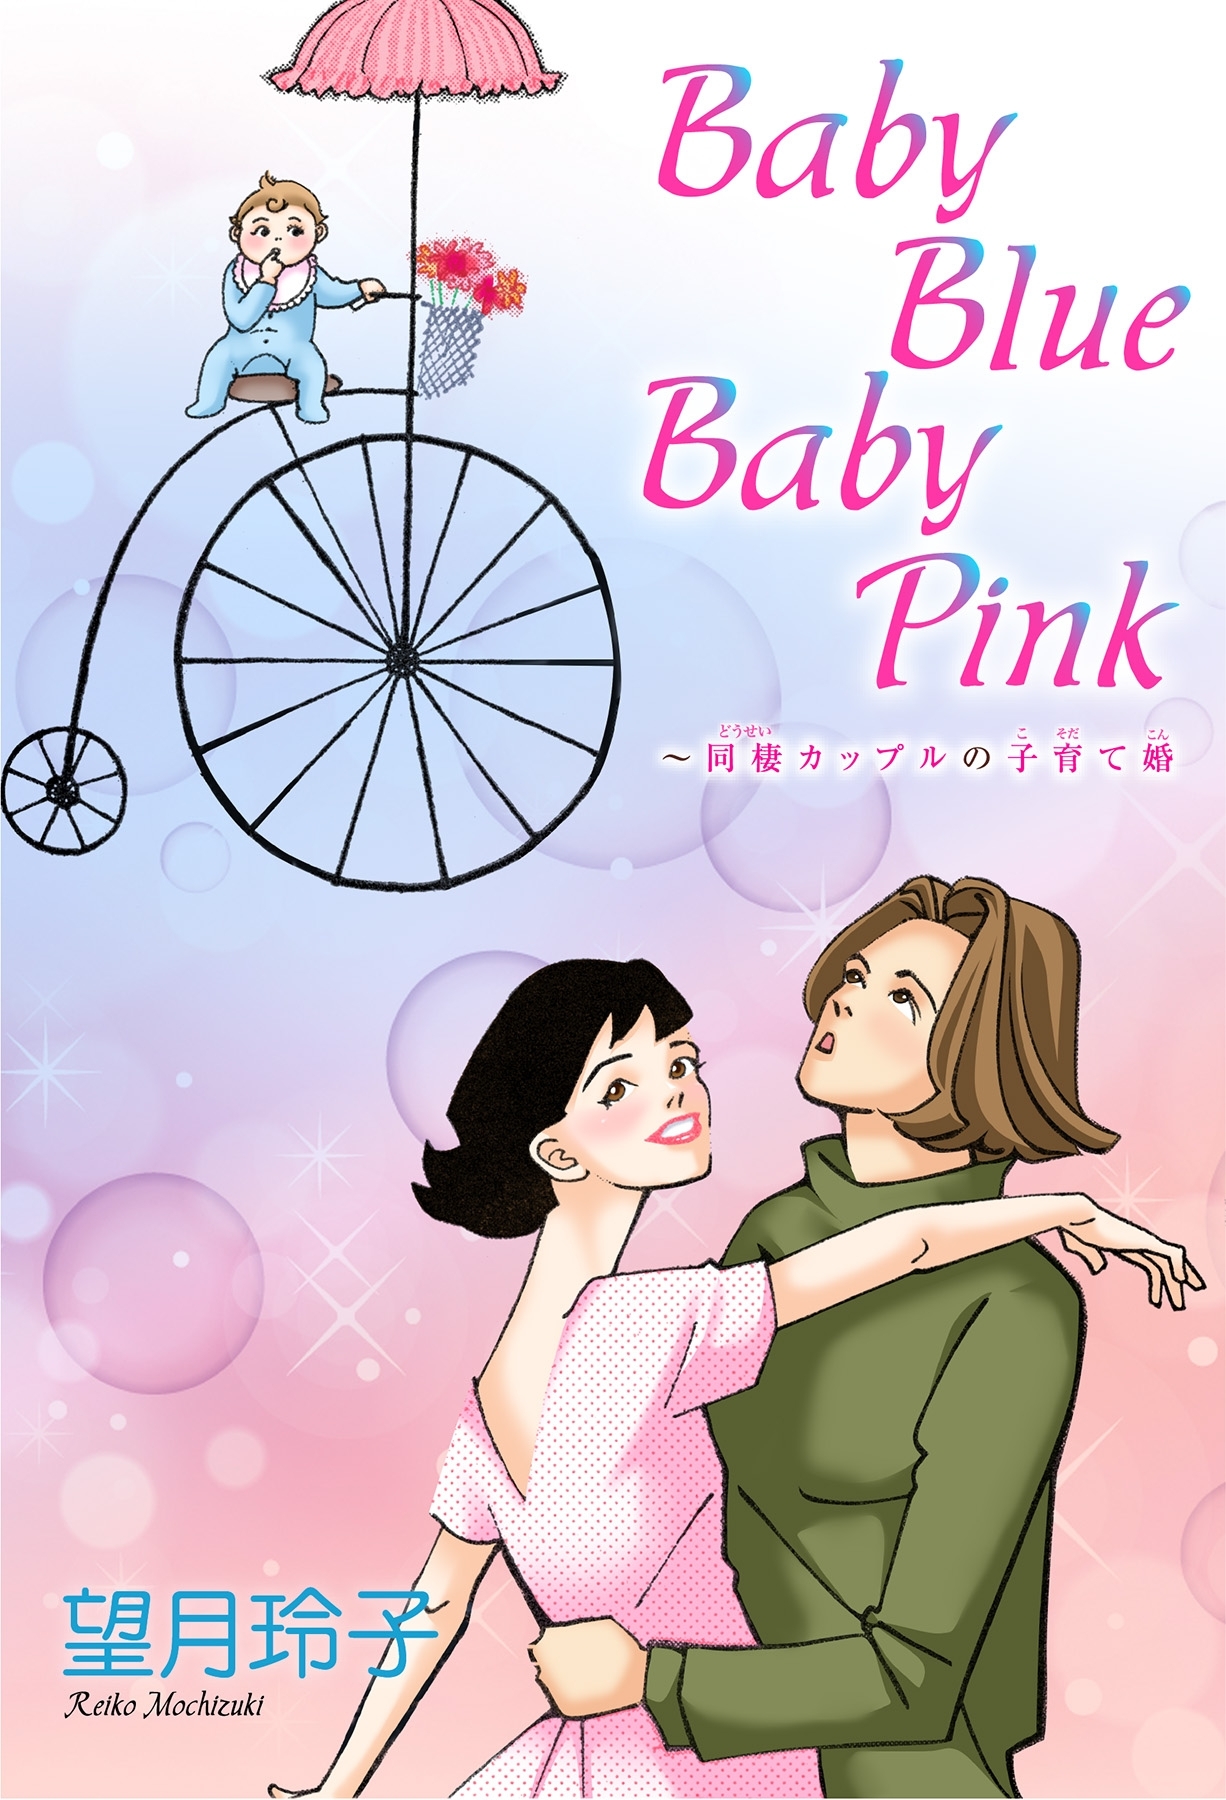 Baby Blue Baby Pink 同棲カップルの子育て婚 無料 試し読みなら Amebaマンガ 旧 読書のお時間です